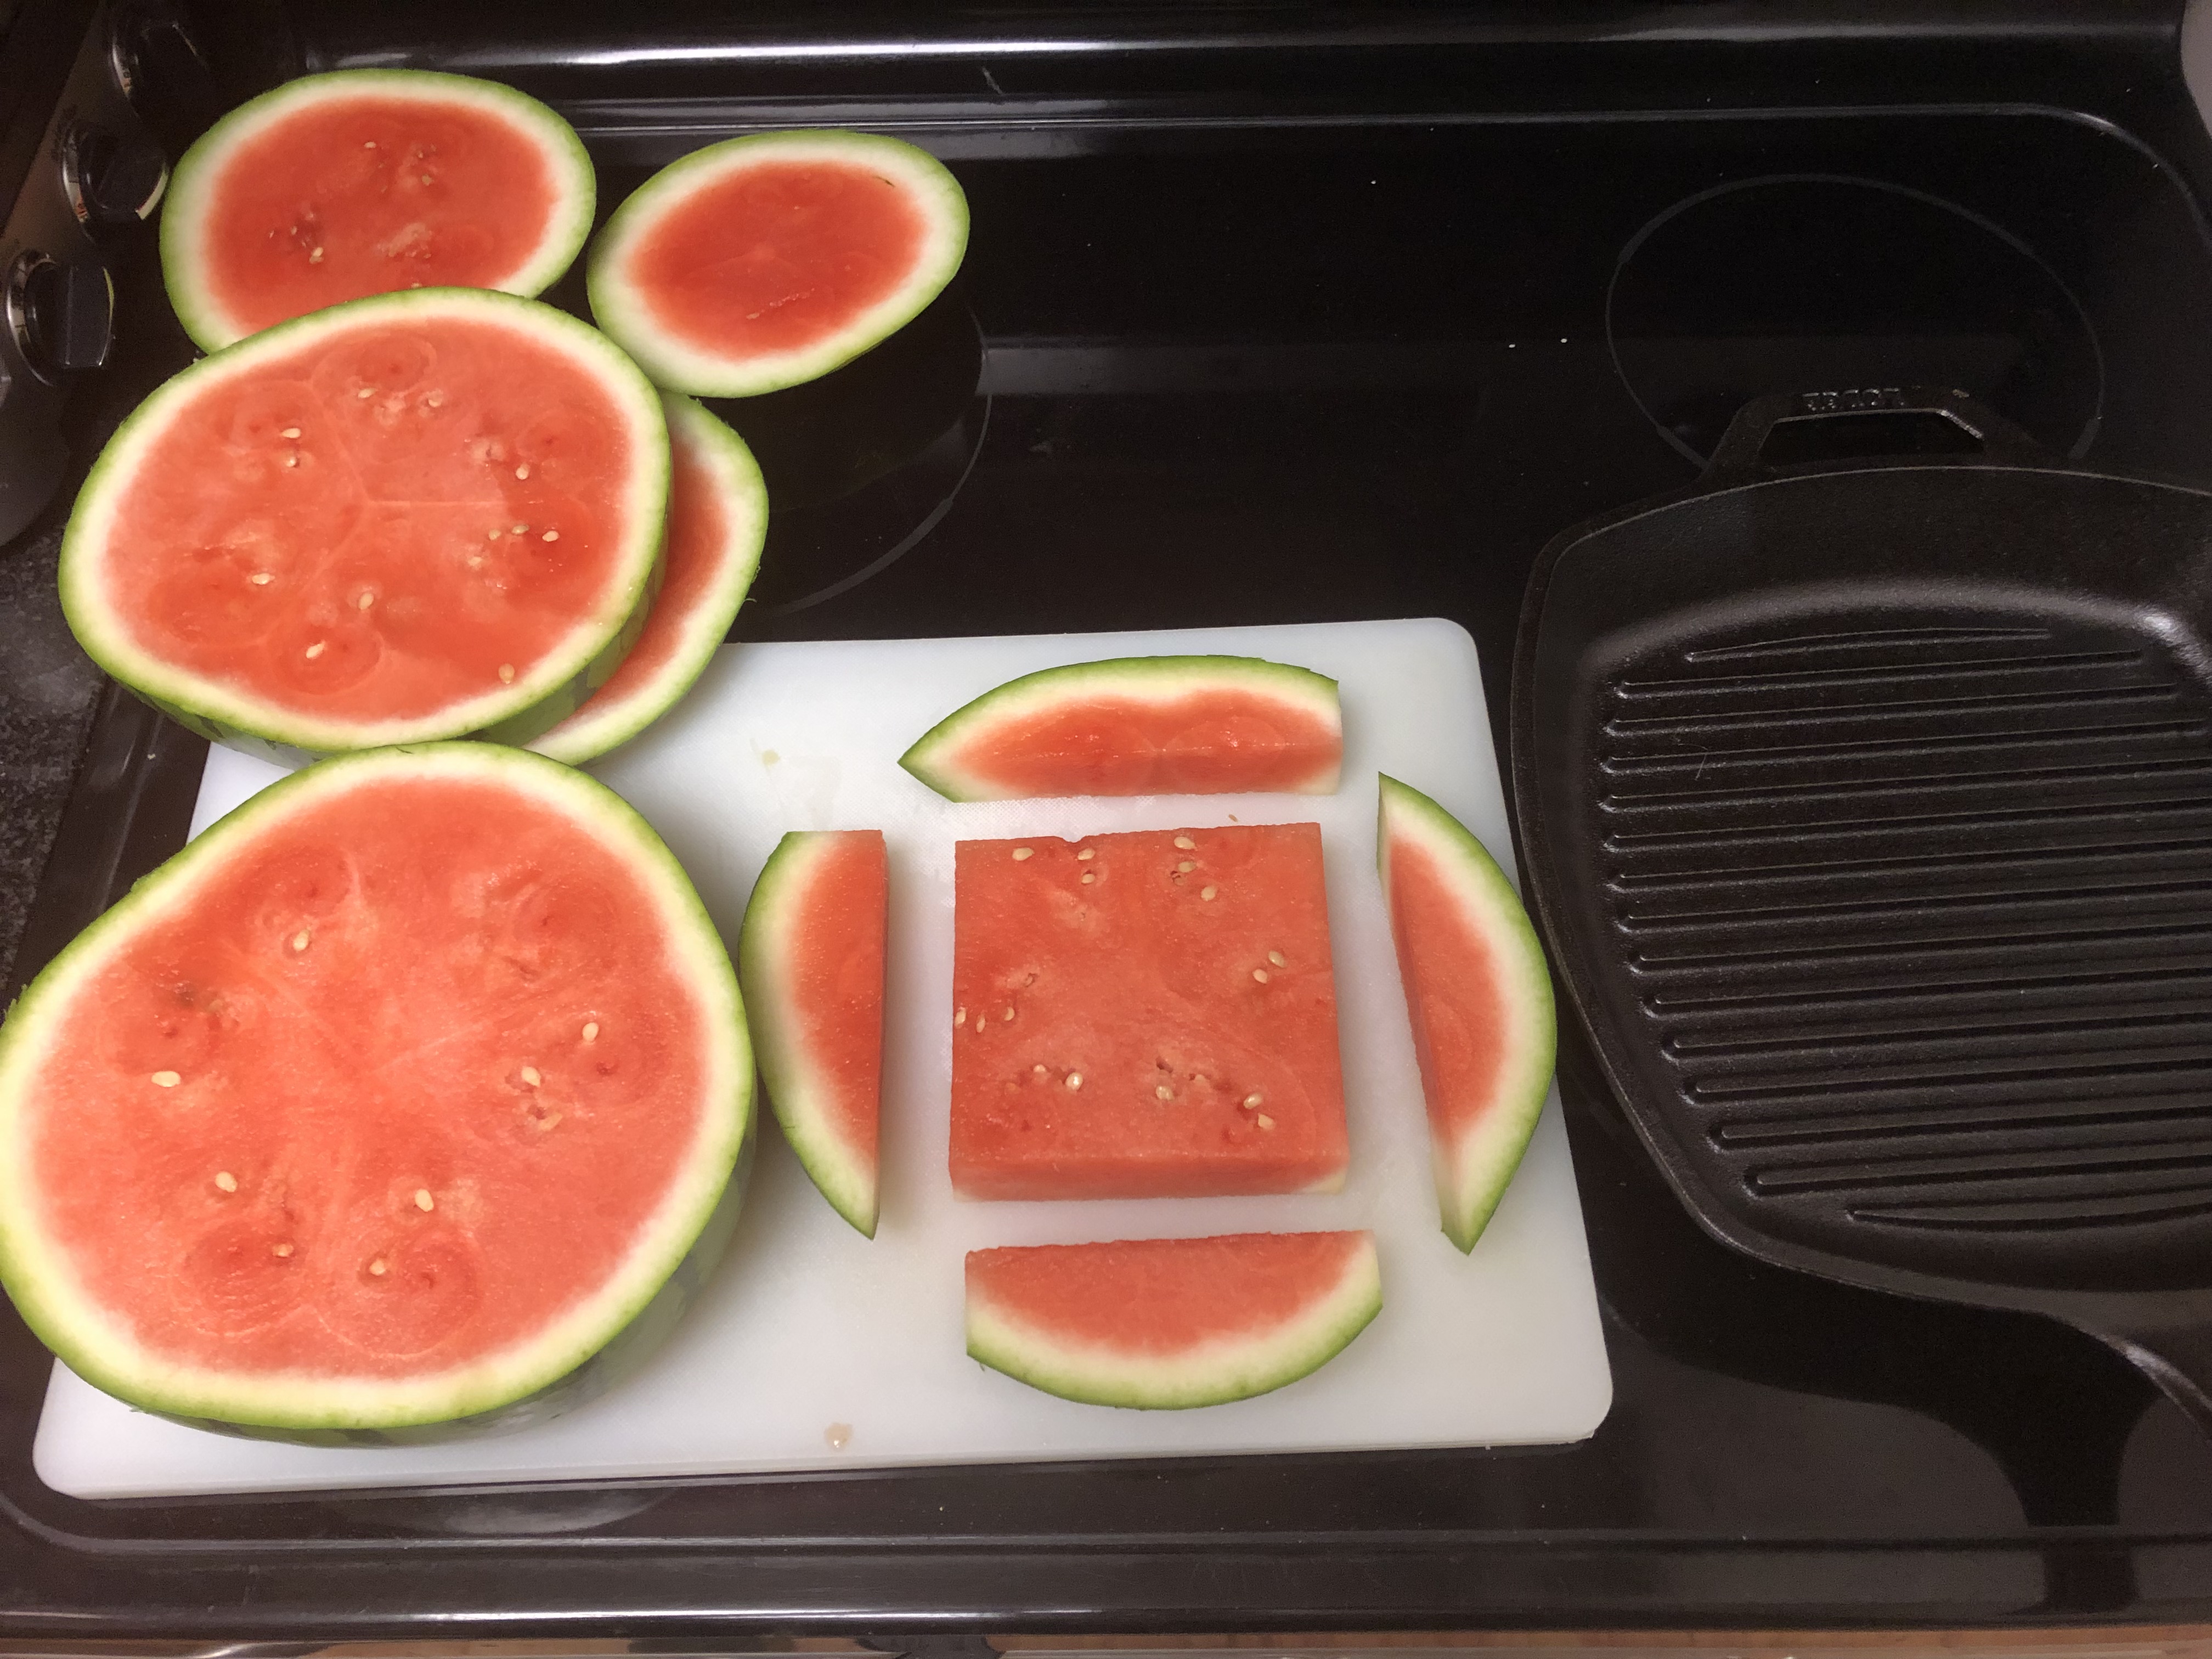 Watermelon trimmed into square shape